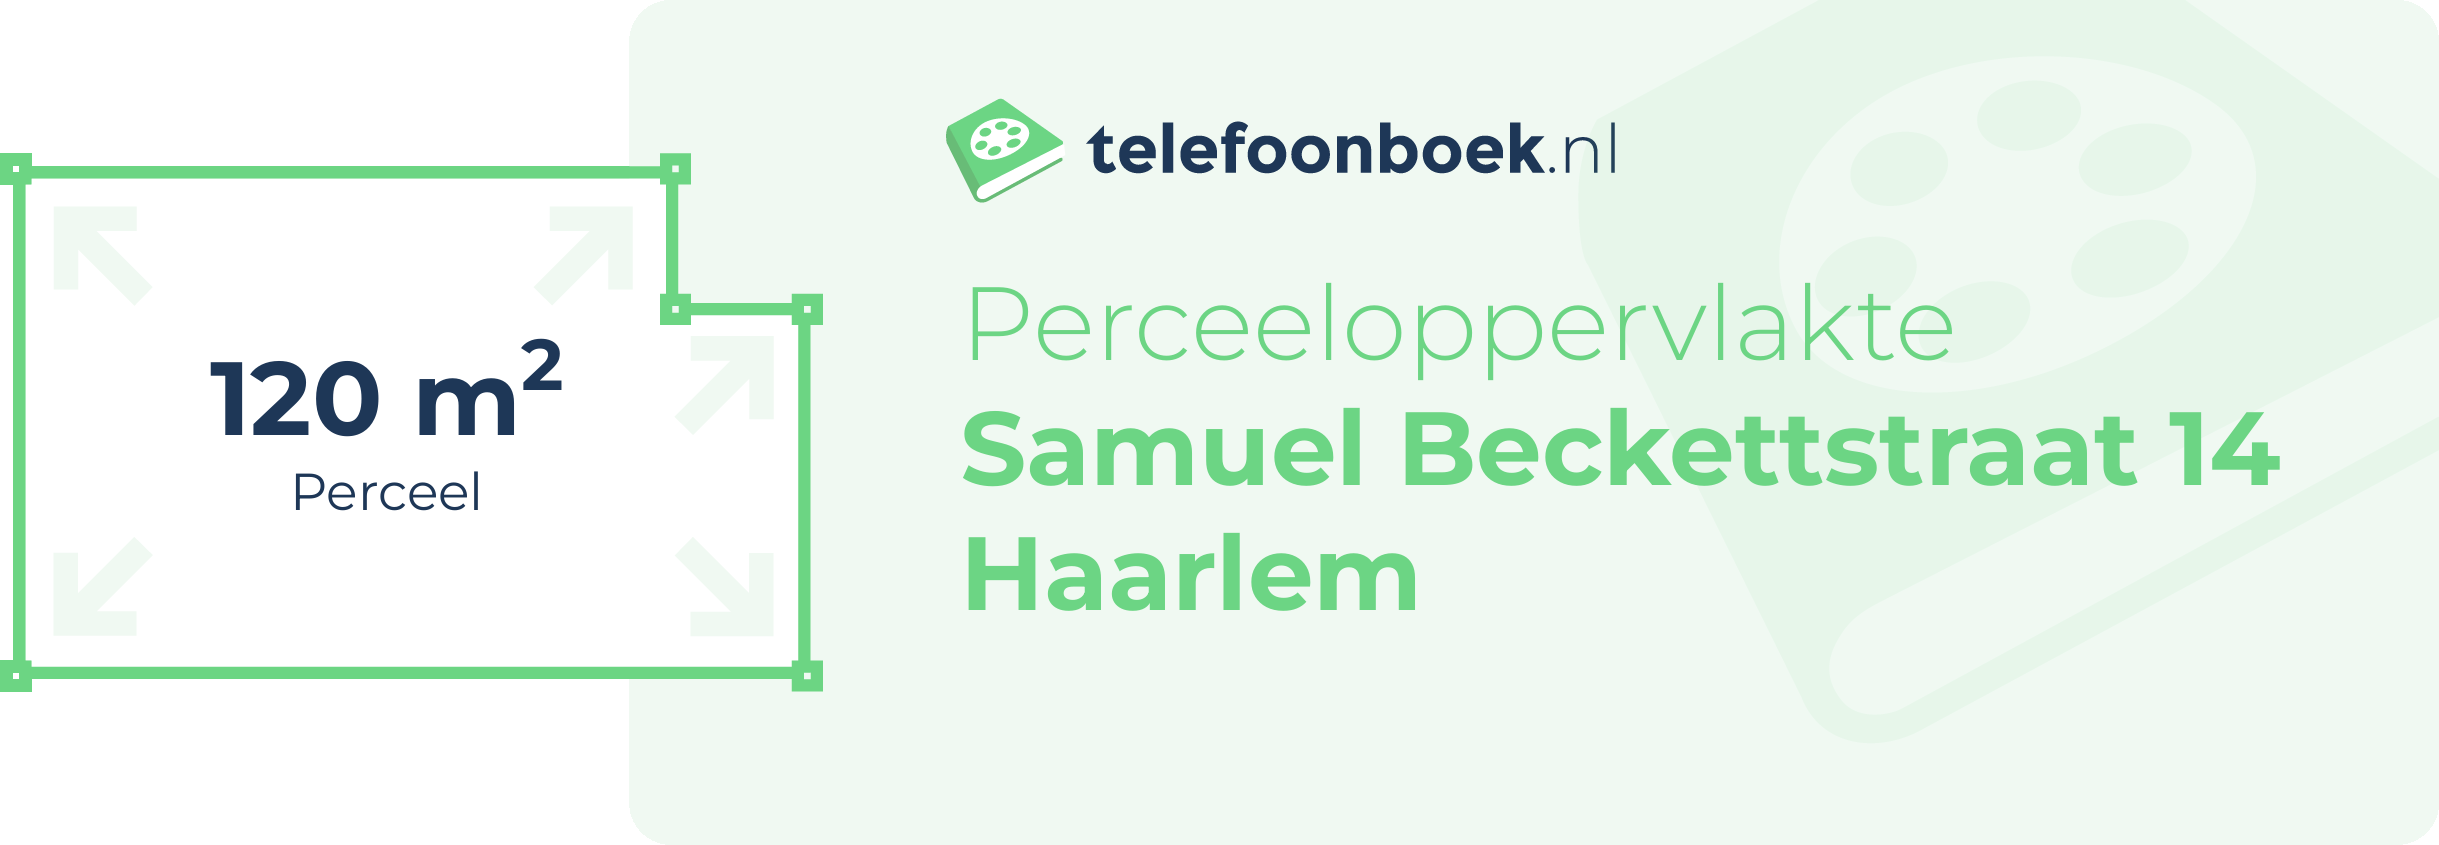 Perceeloppervlakte Samuel Beckettstraat 14 Haarlem